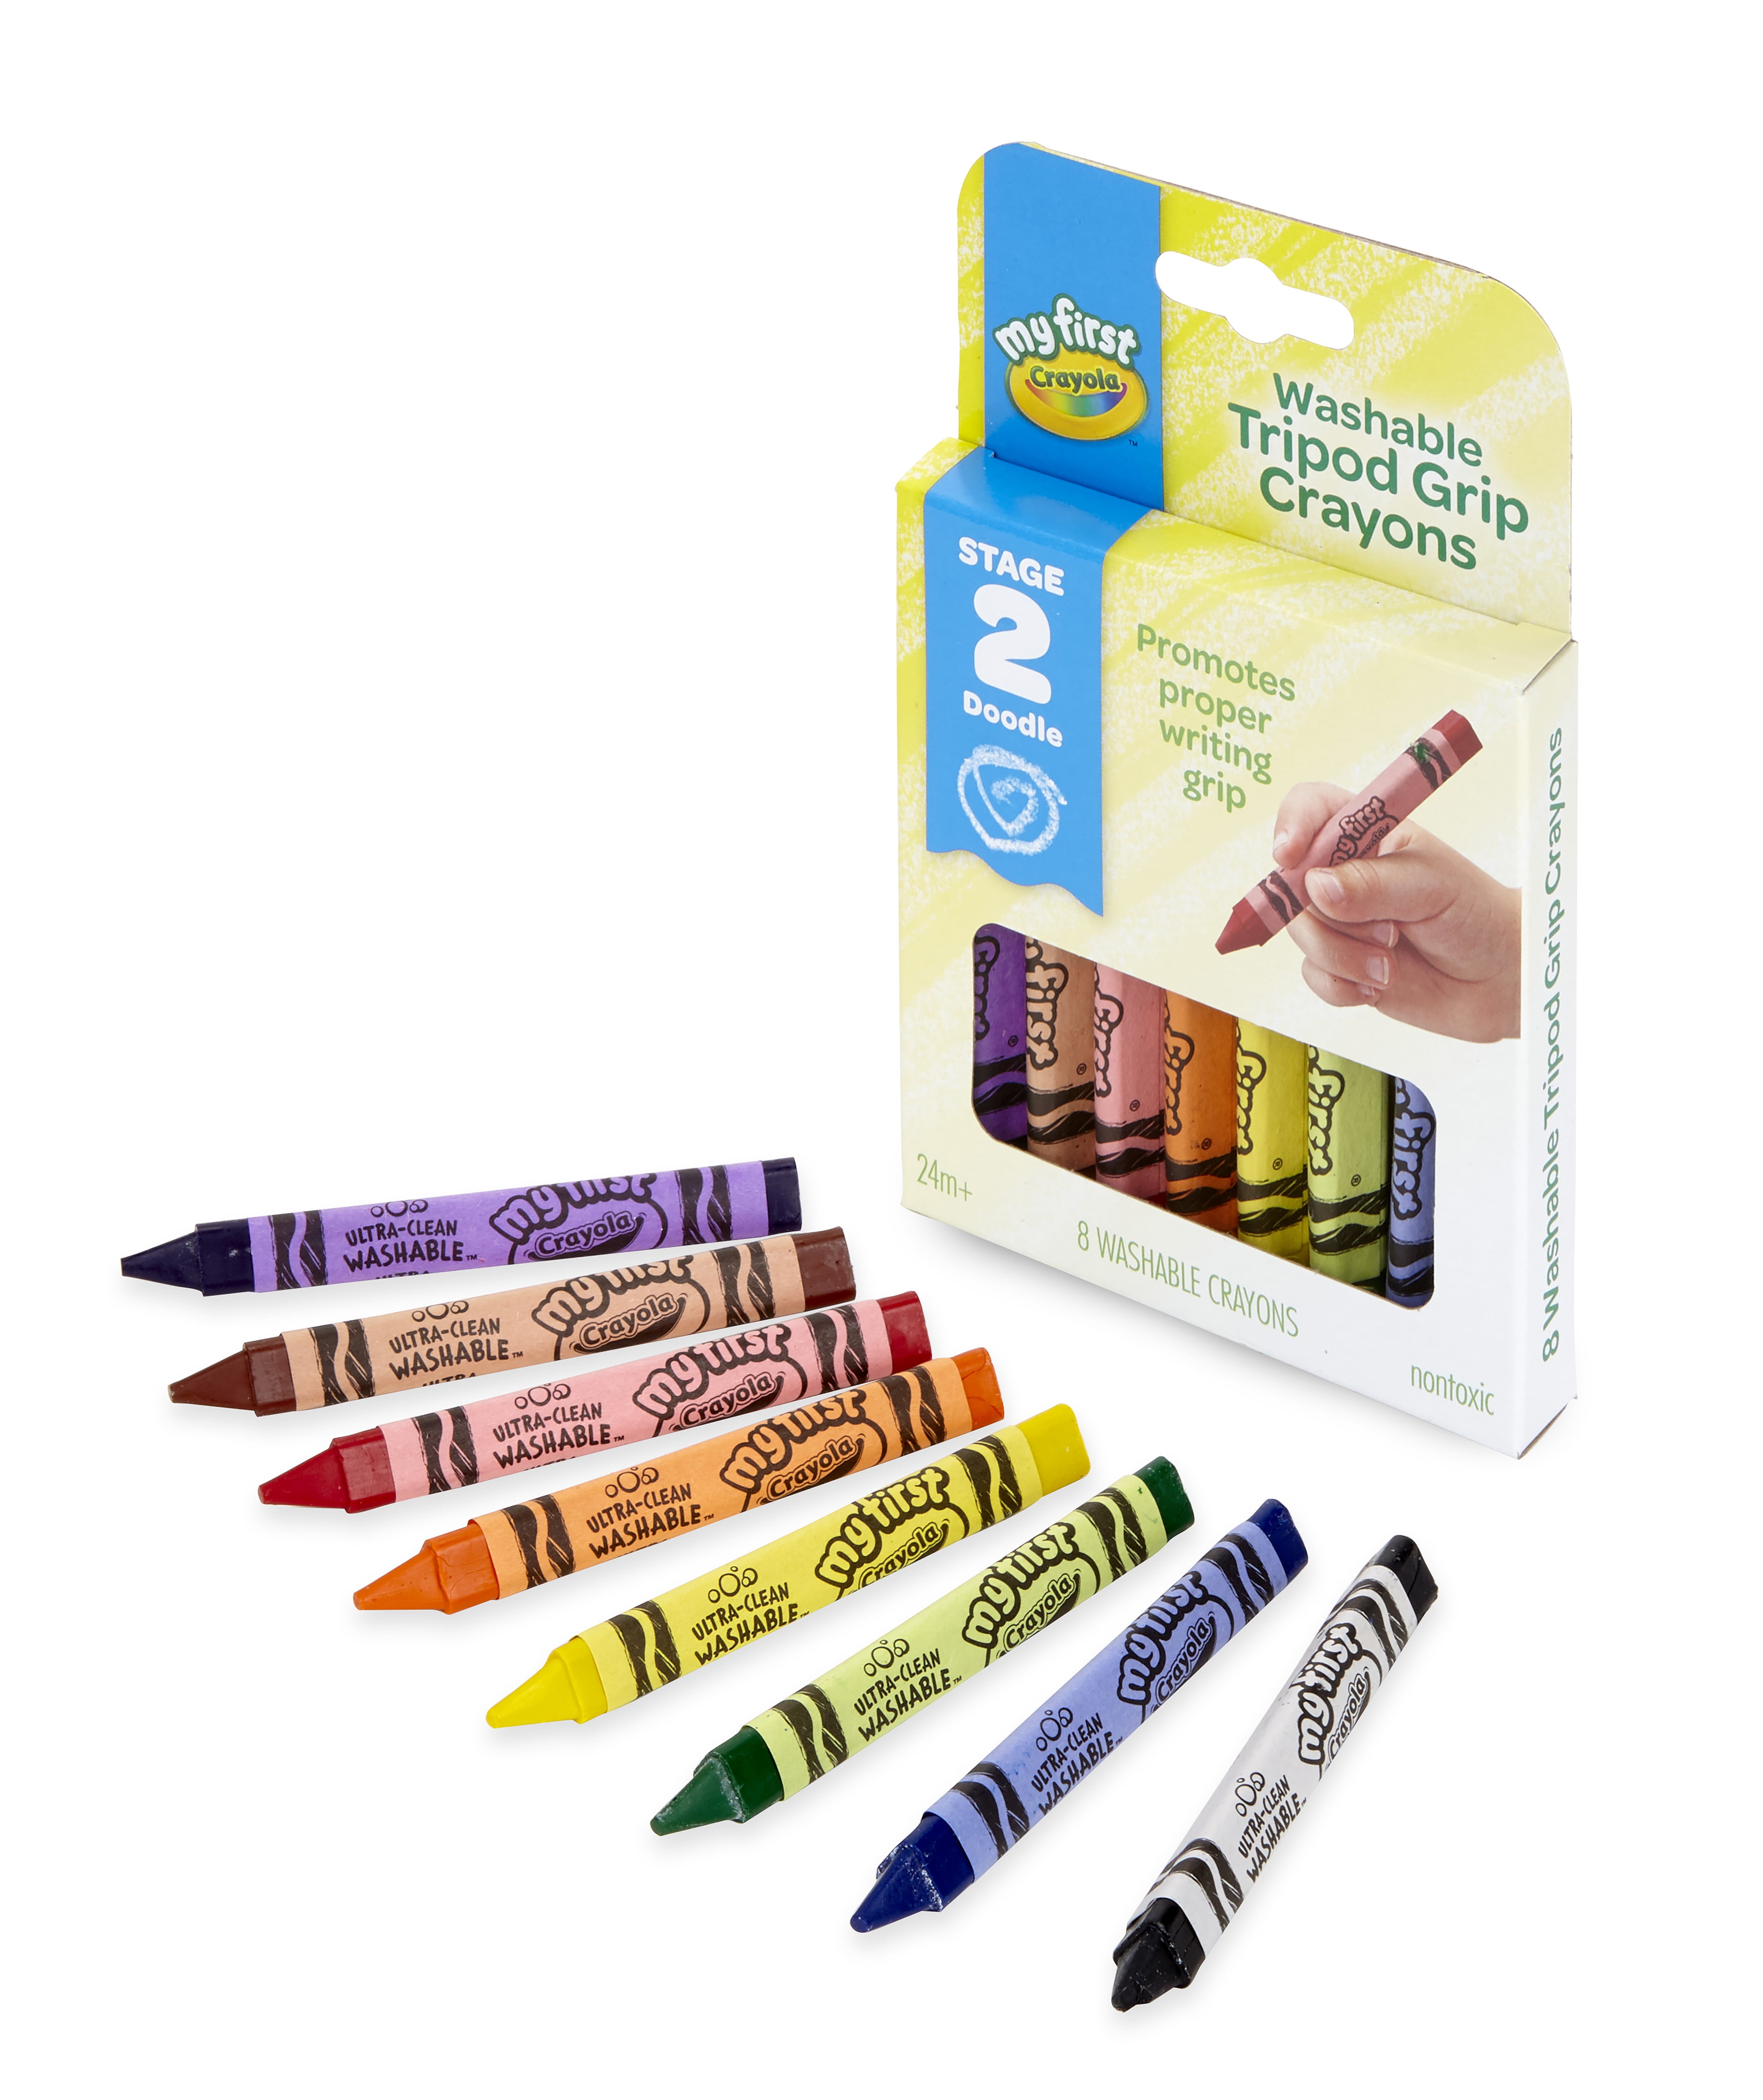 Crayola Jumbo Crayon Set, 8 Count, Kindergarten School Supplies, Toddler  Crayons, Gifts for Toddlers